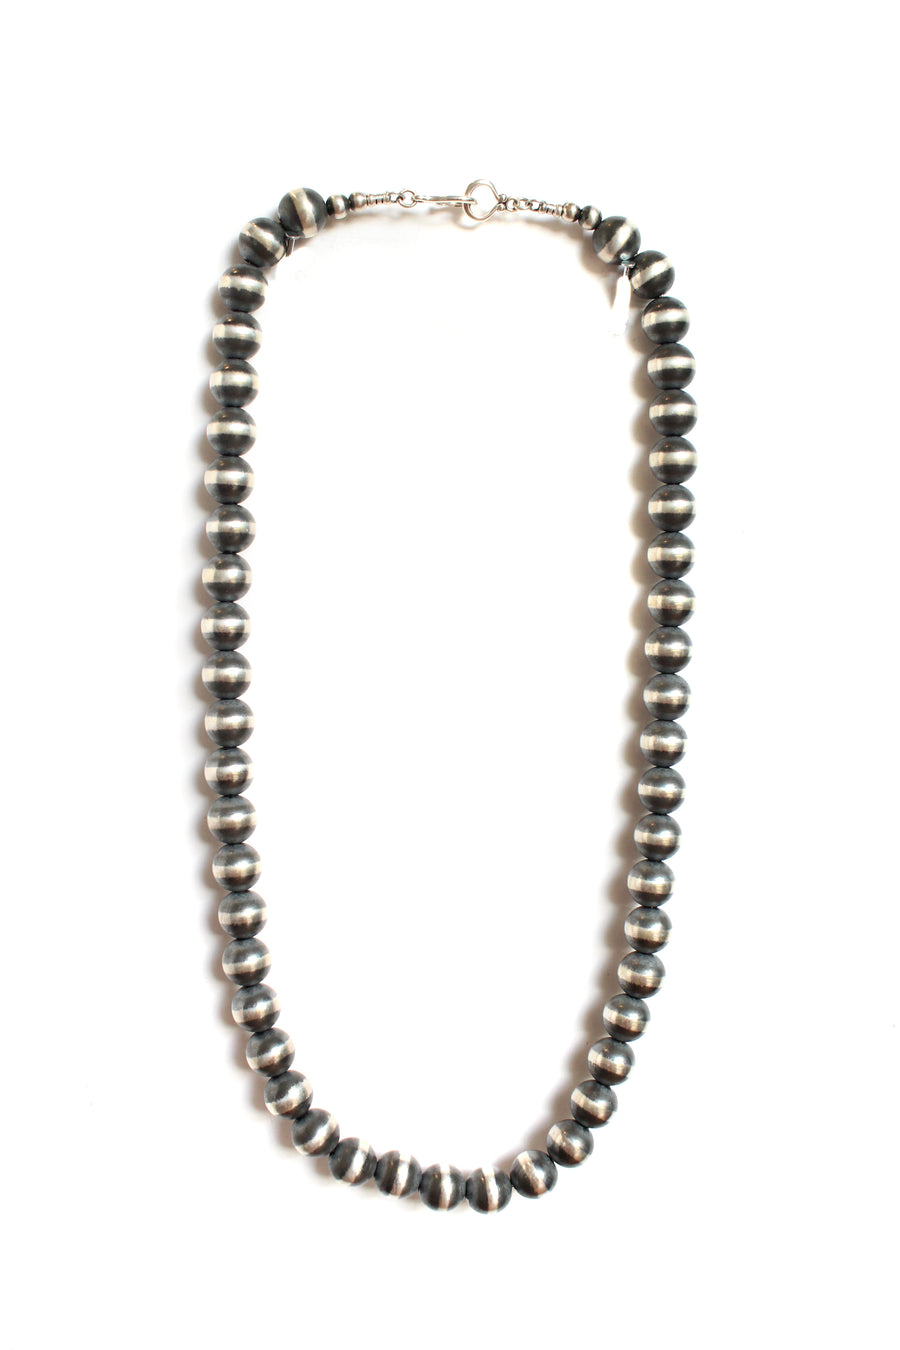 12mm Navajo Pearls